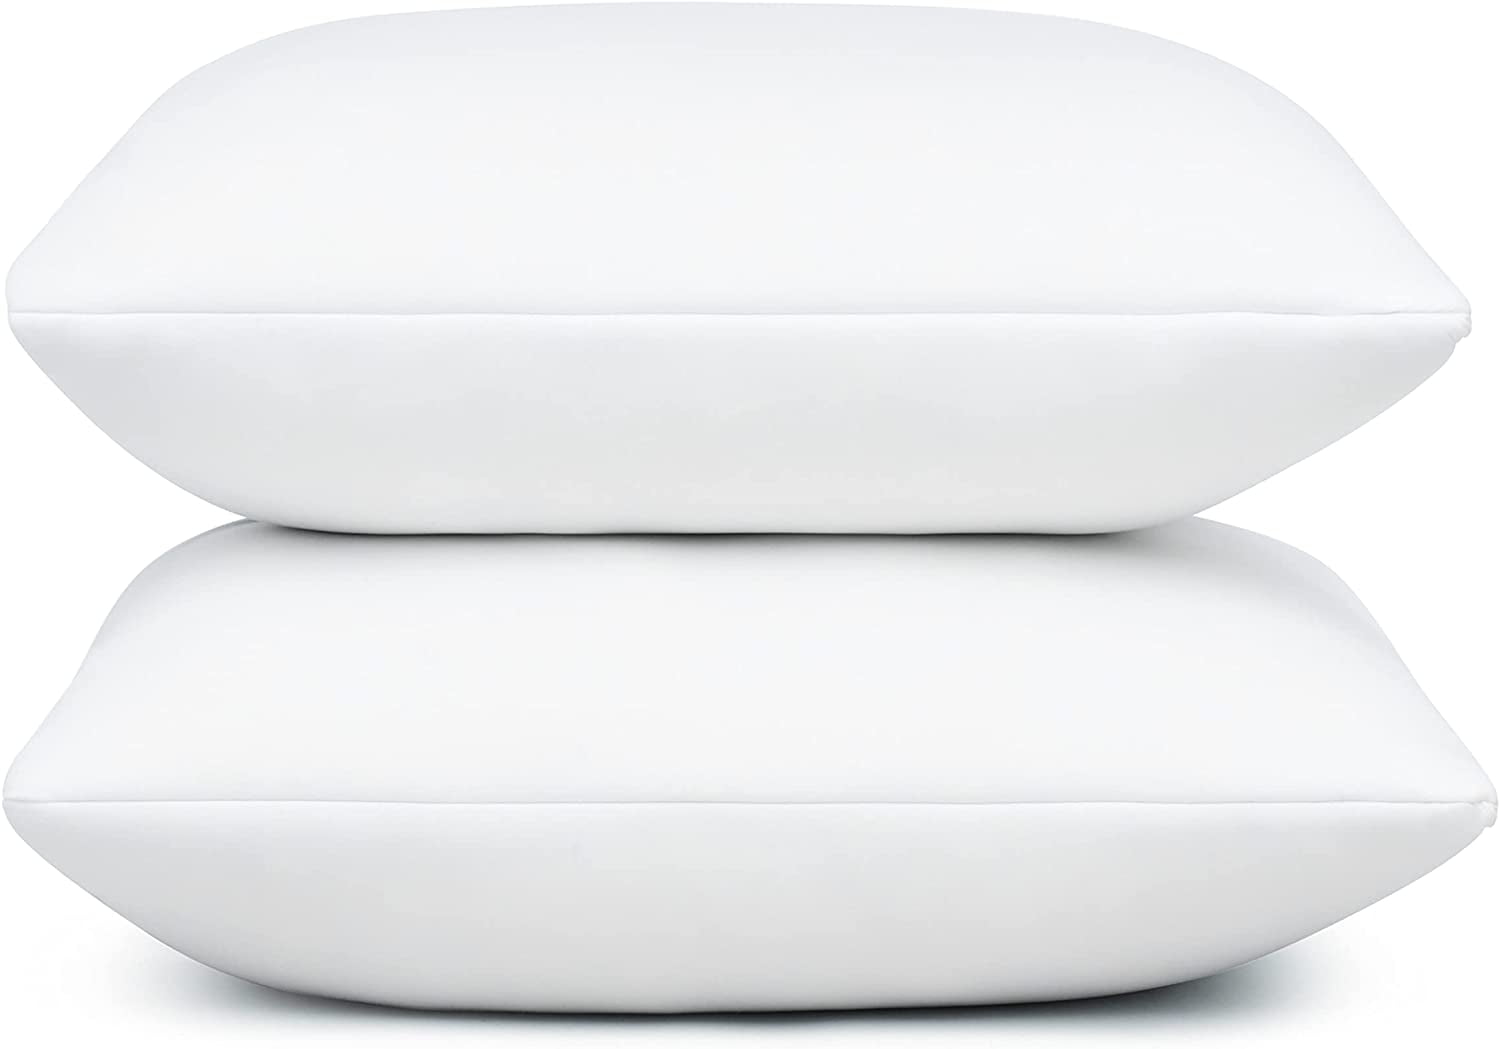 18x18 Pillow Insert – The MoMeMans®